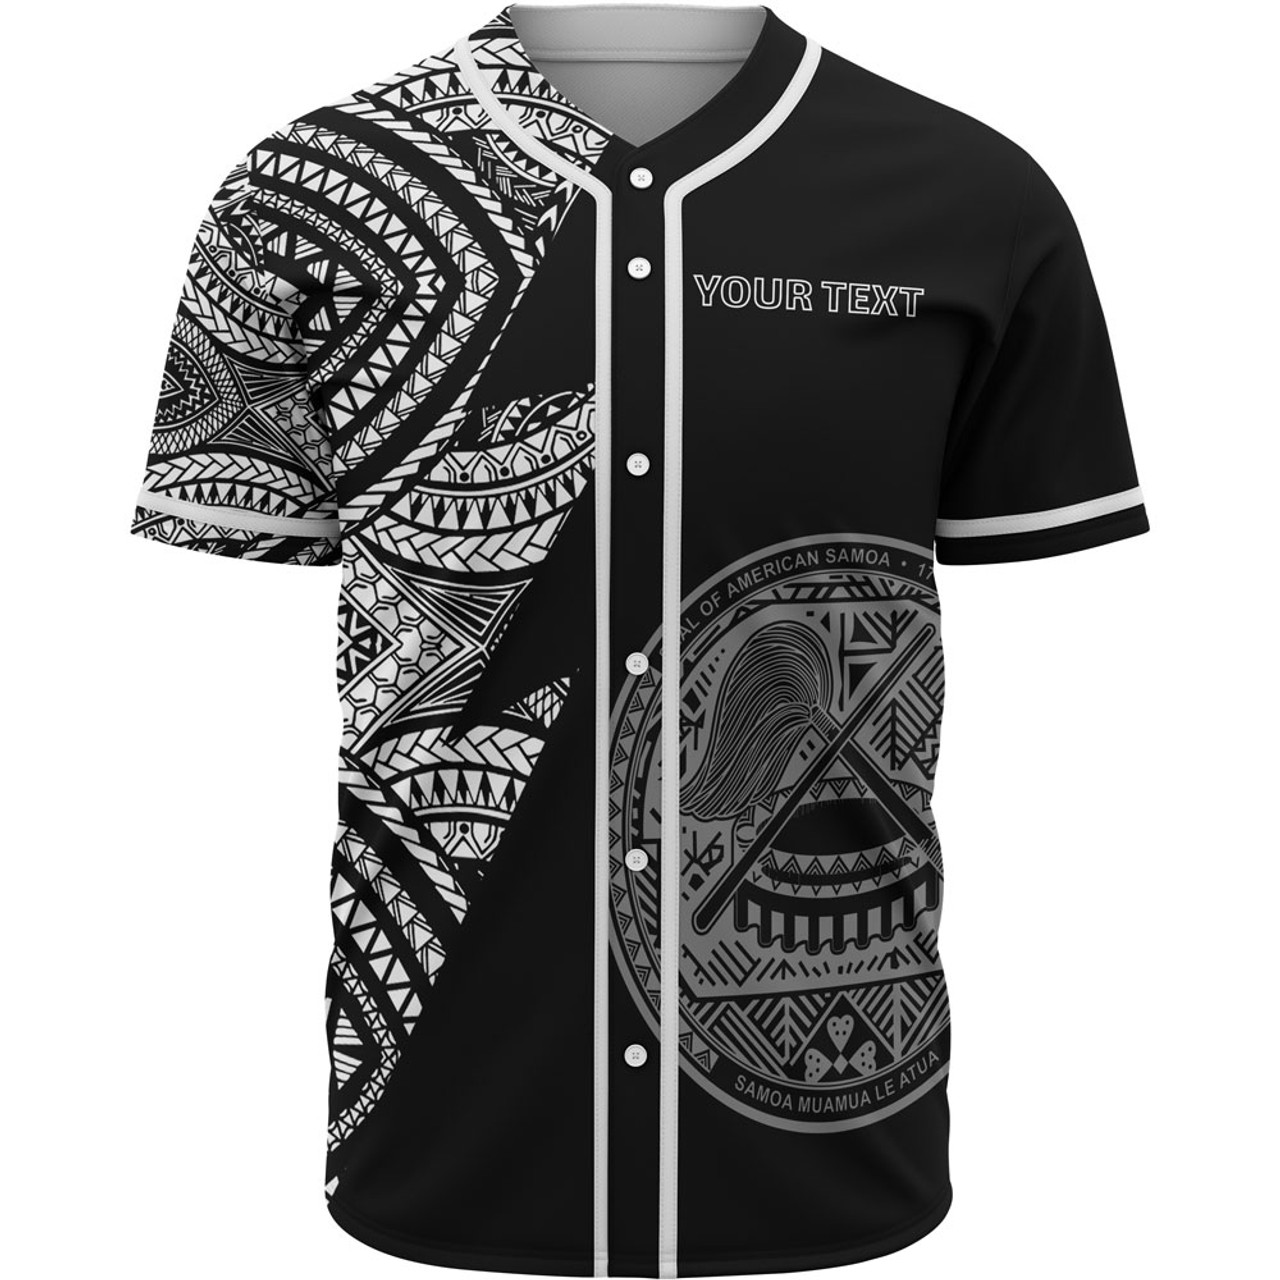 American Samoa Custom Personalized Baseball Shirt - Flash Style White